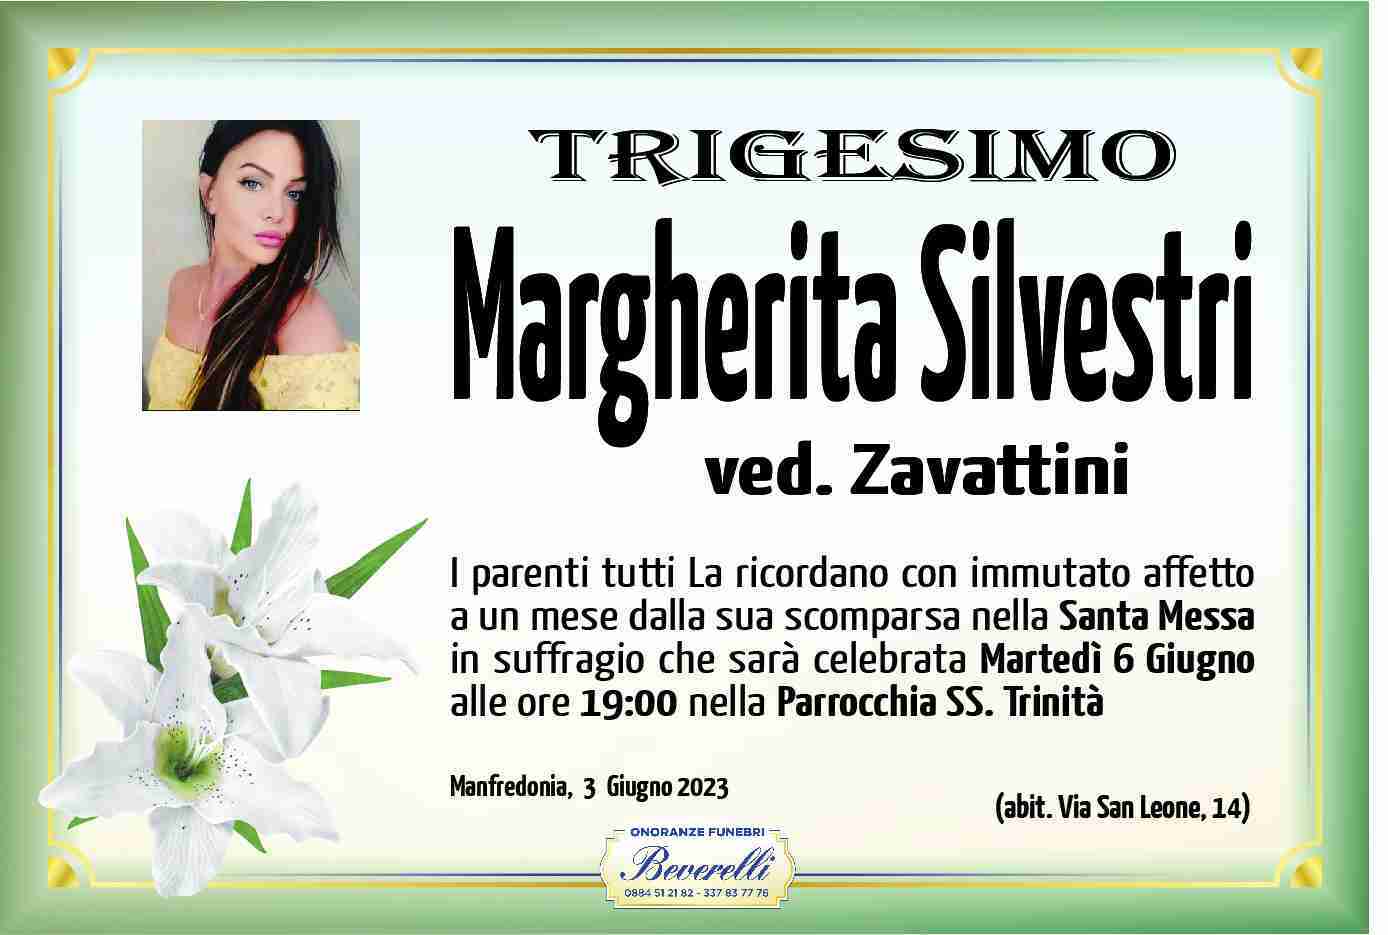 Margherita Silvestri